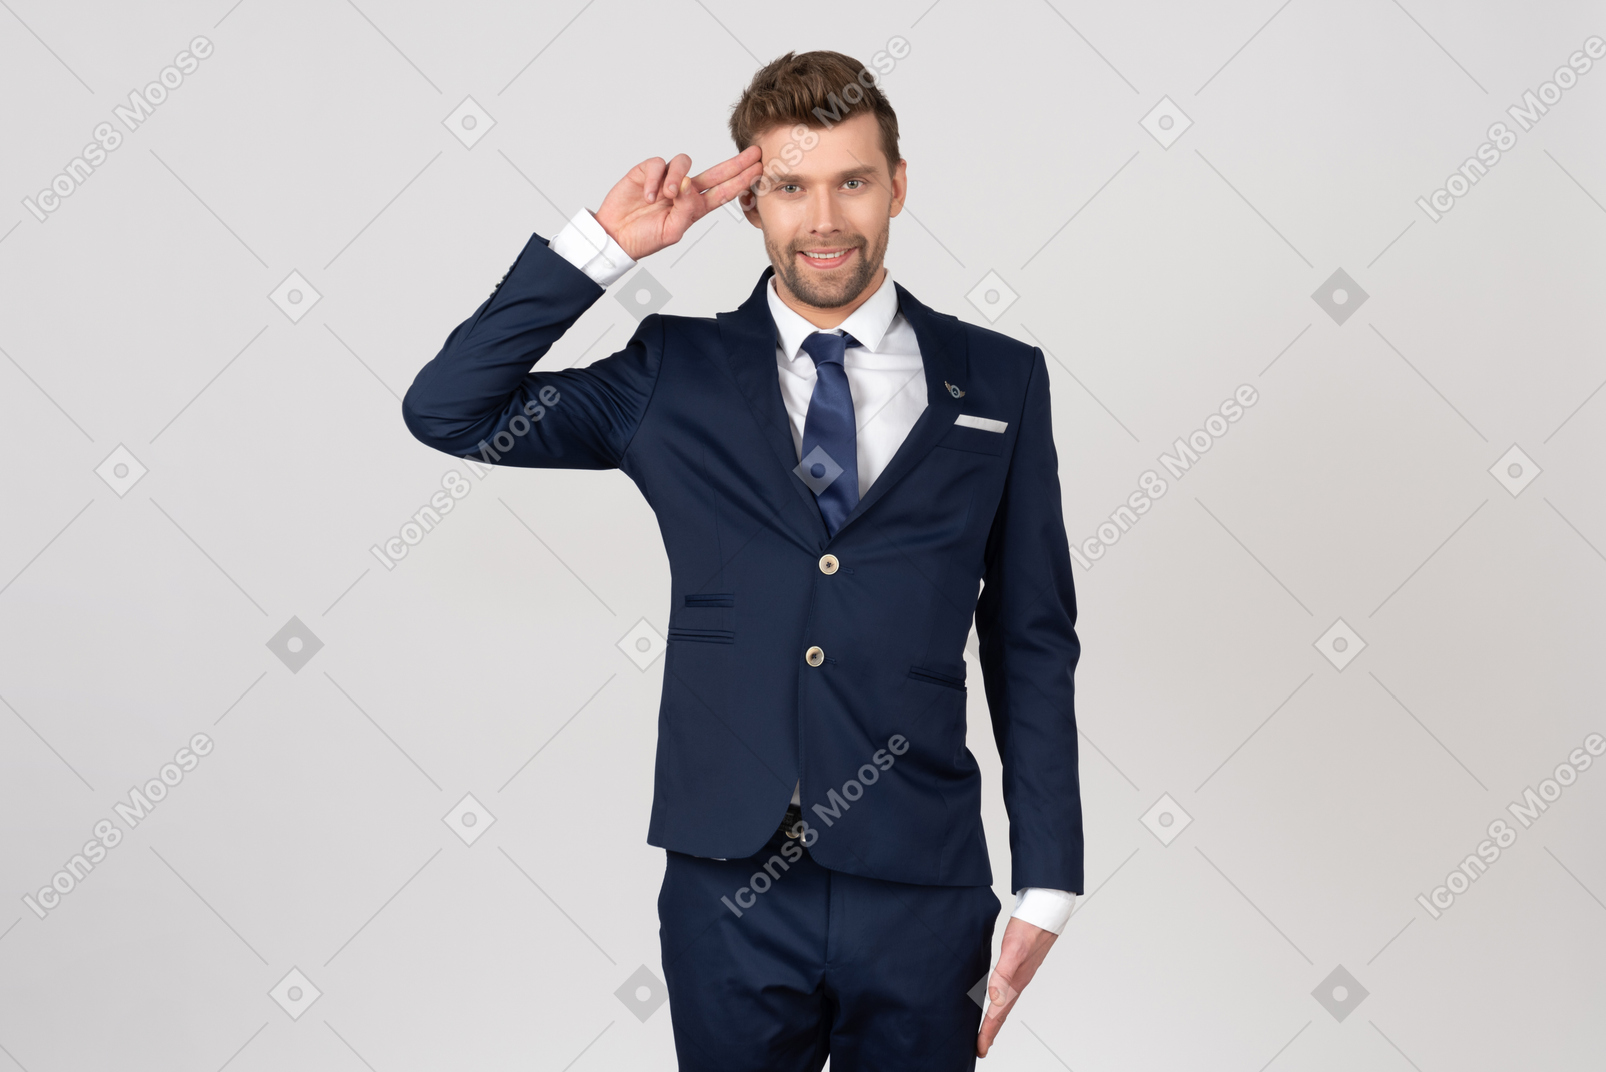 Male flight attendant giving a salute